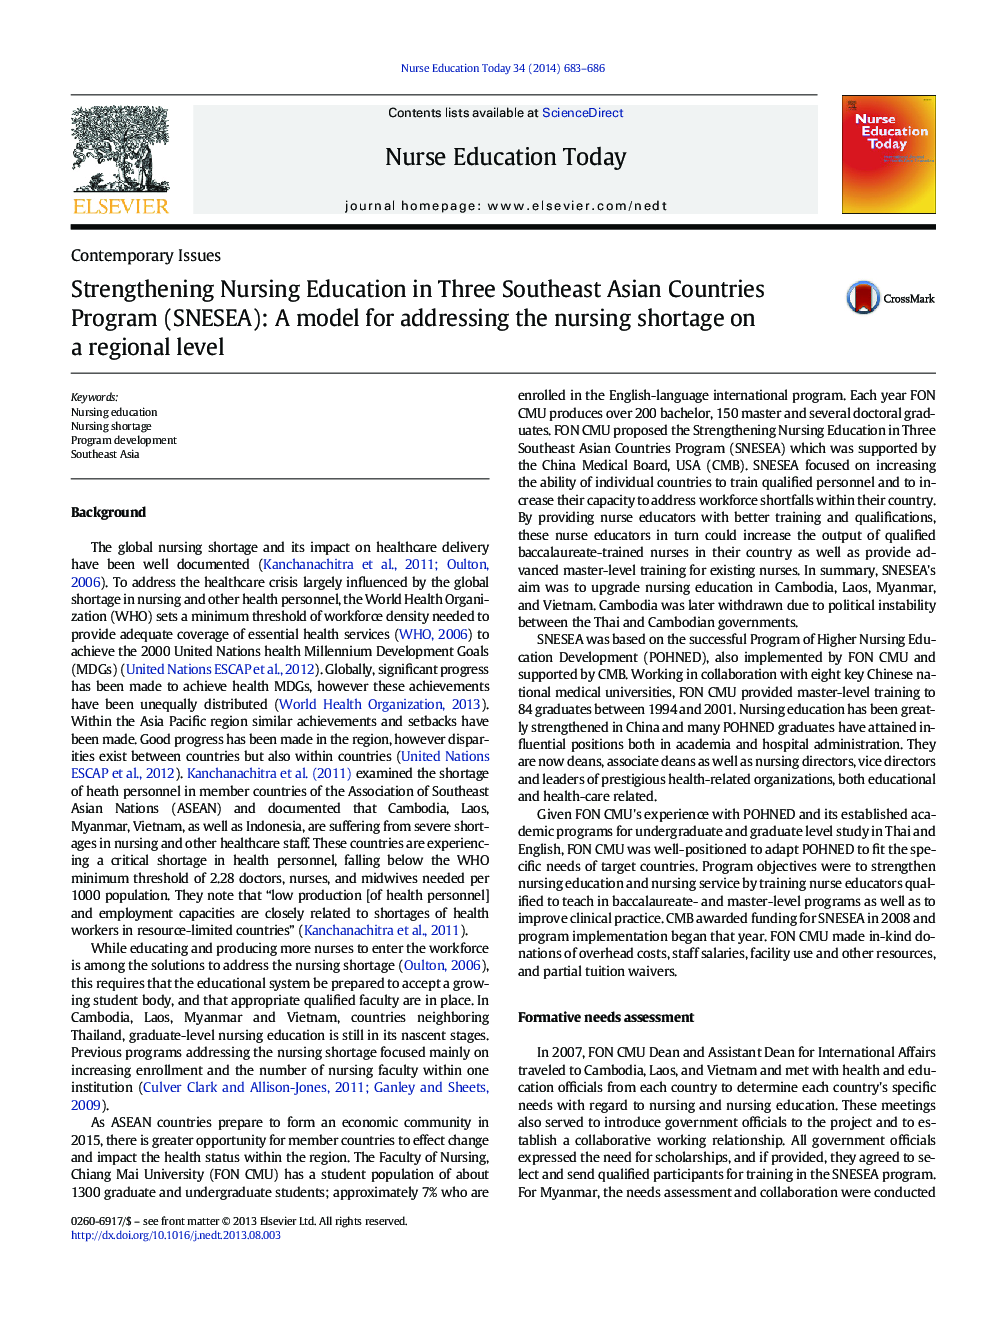 Strengthening Nursing Education in Three Southeast Asian Countries Program (SNESEA): A model for addressing the nursing shortage on a regional level